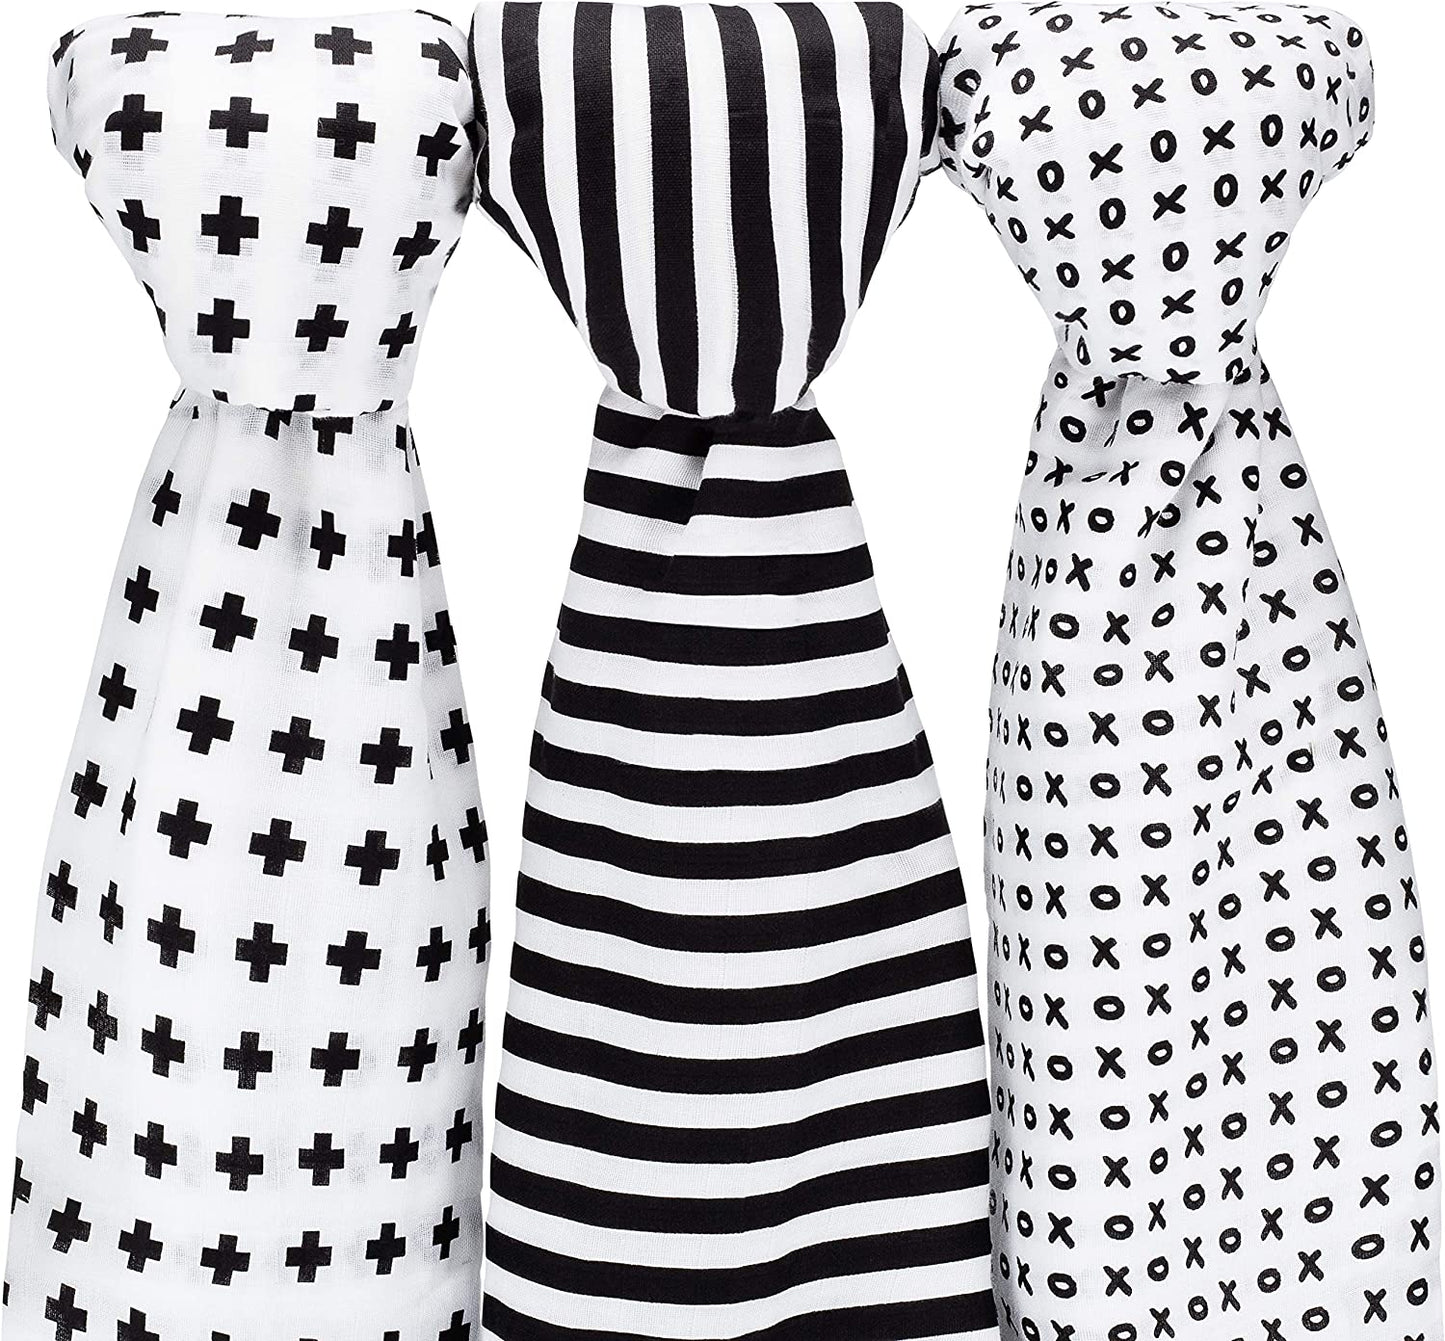 Muslin Baby Swaddle Blankets, 47X47 (3 Pack) Black, White, XO, Stripe, Cross